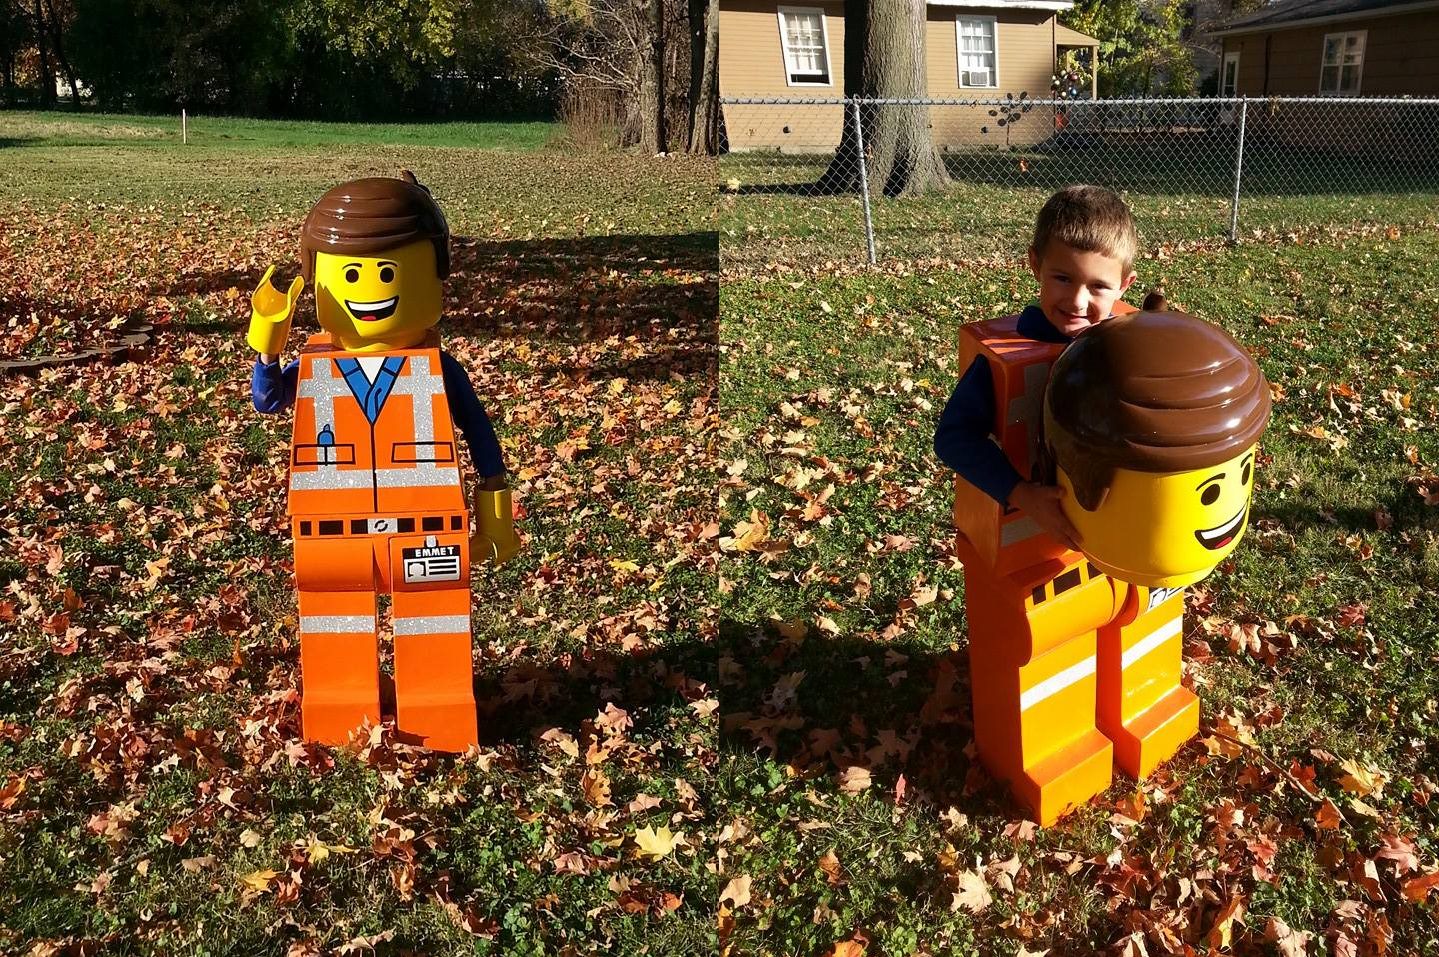 This kid's lego costume is amazing.